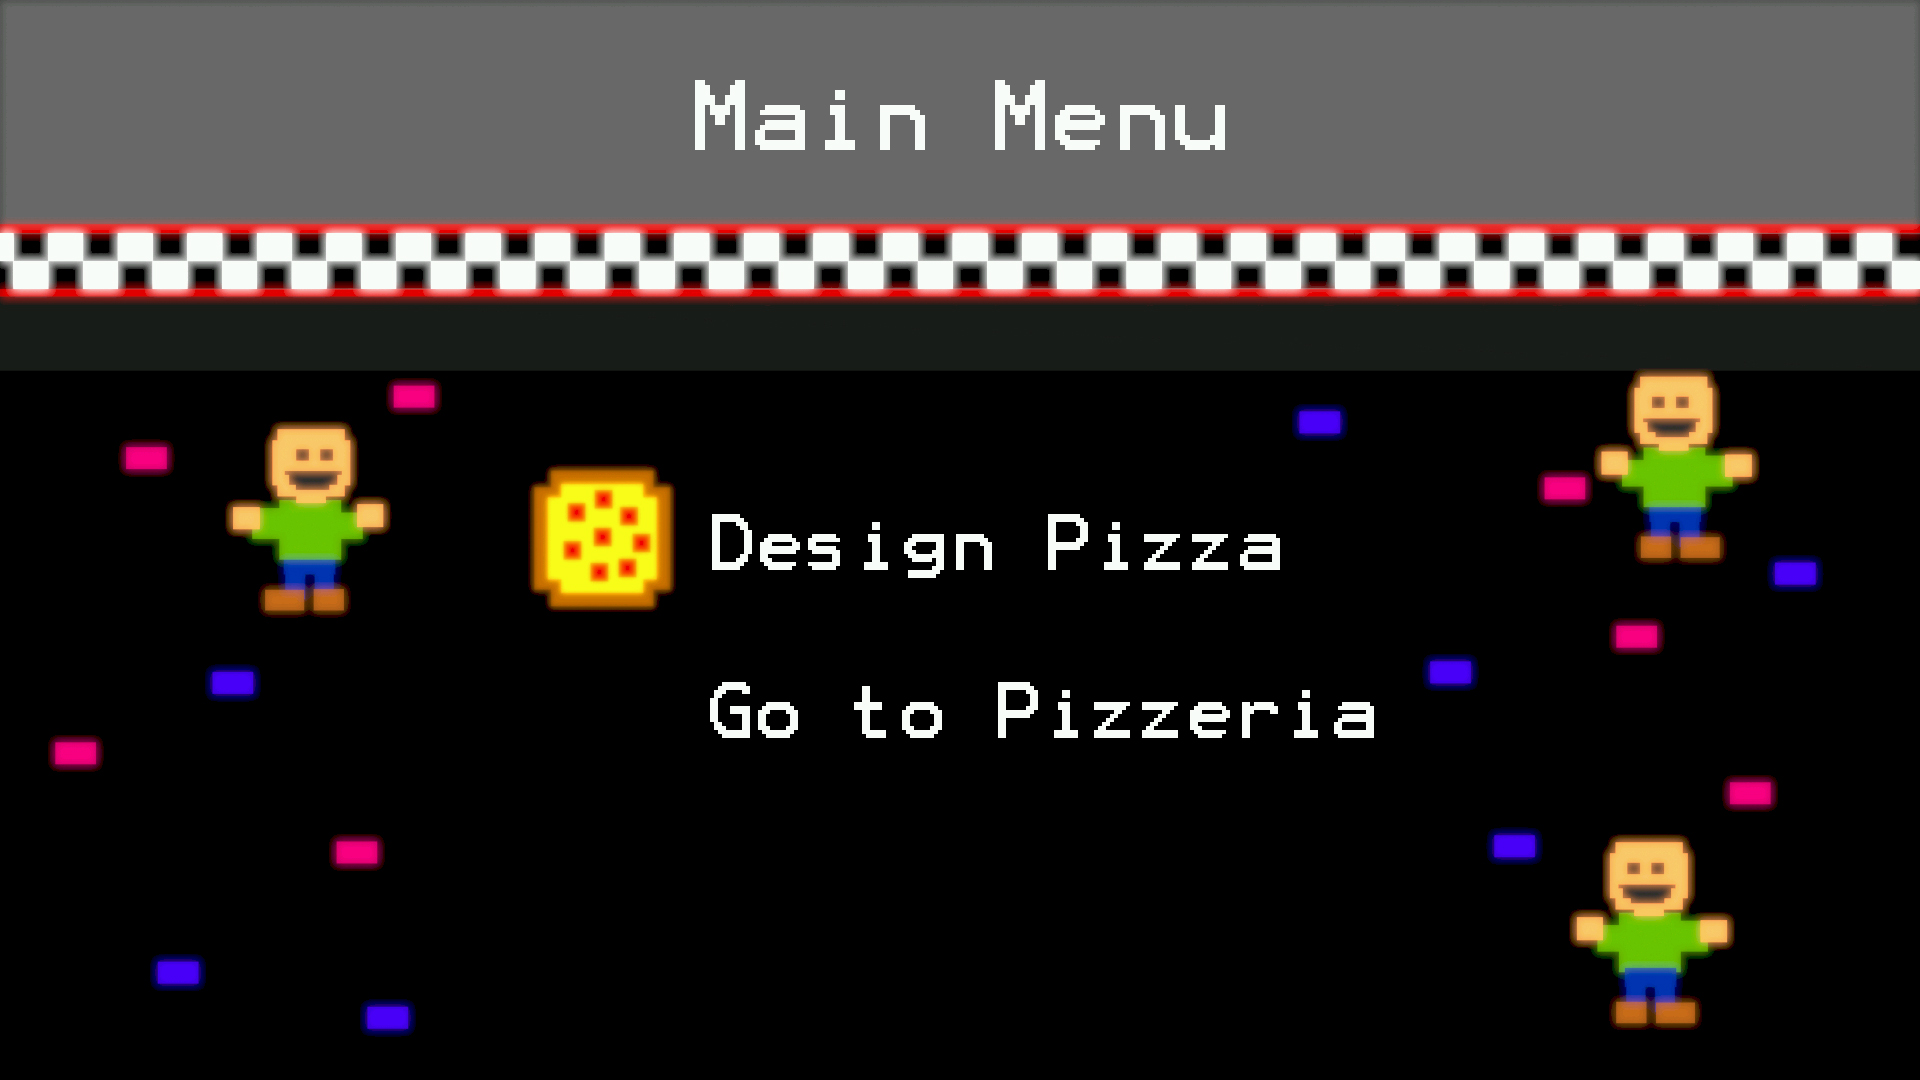 Freddy Fazbear's Pizzeria Simulator no Steam